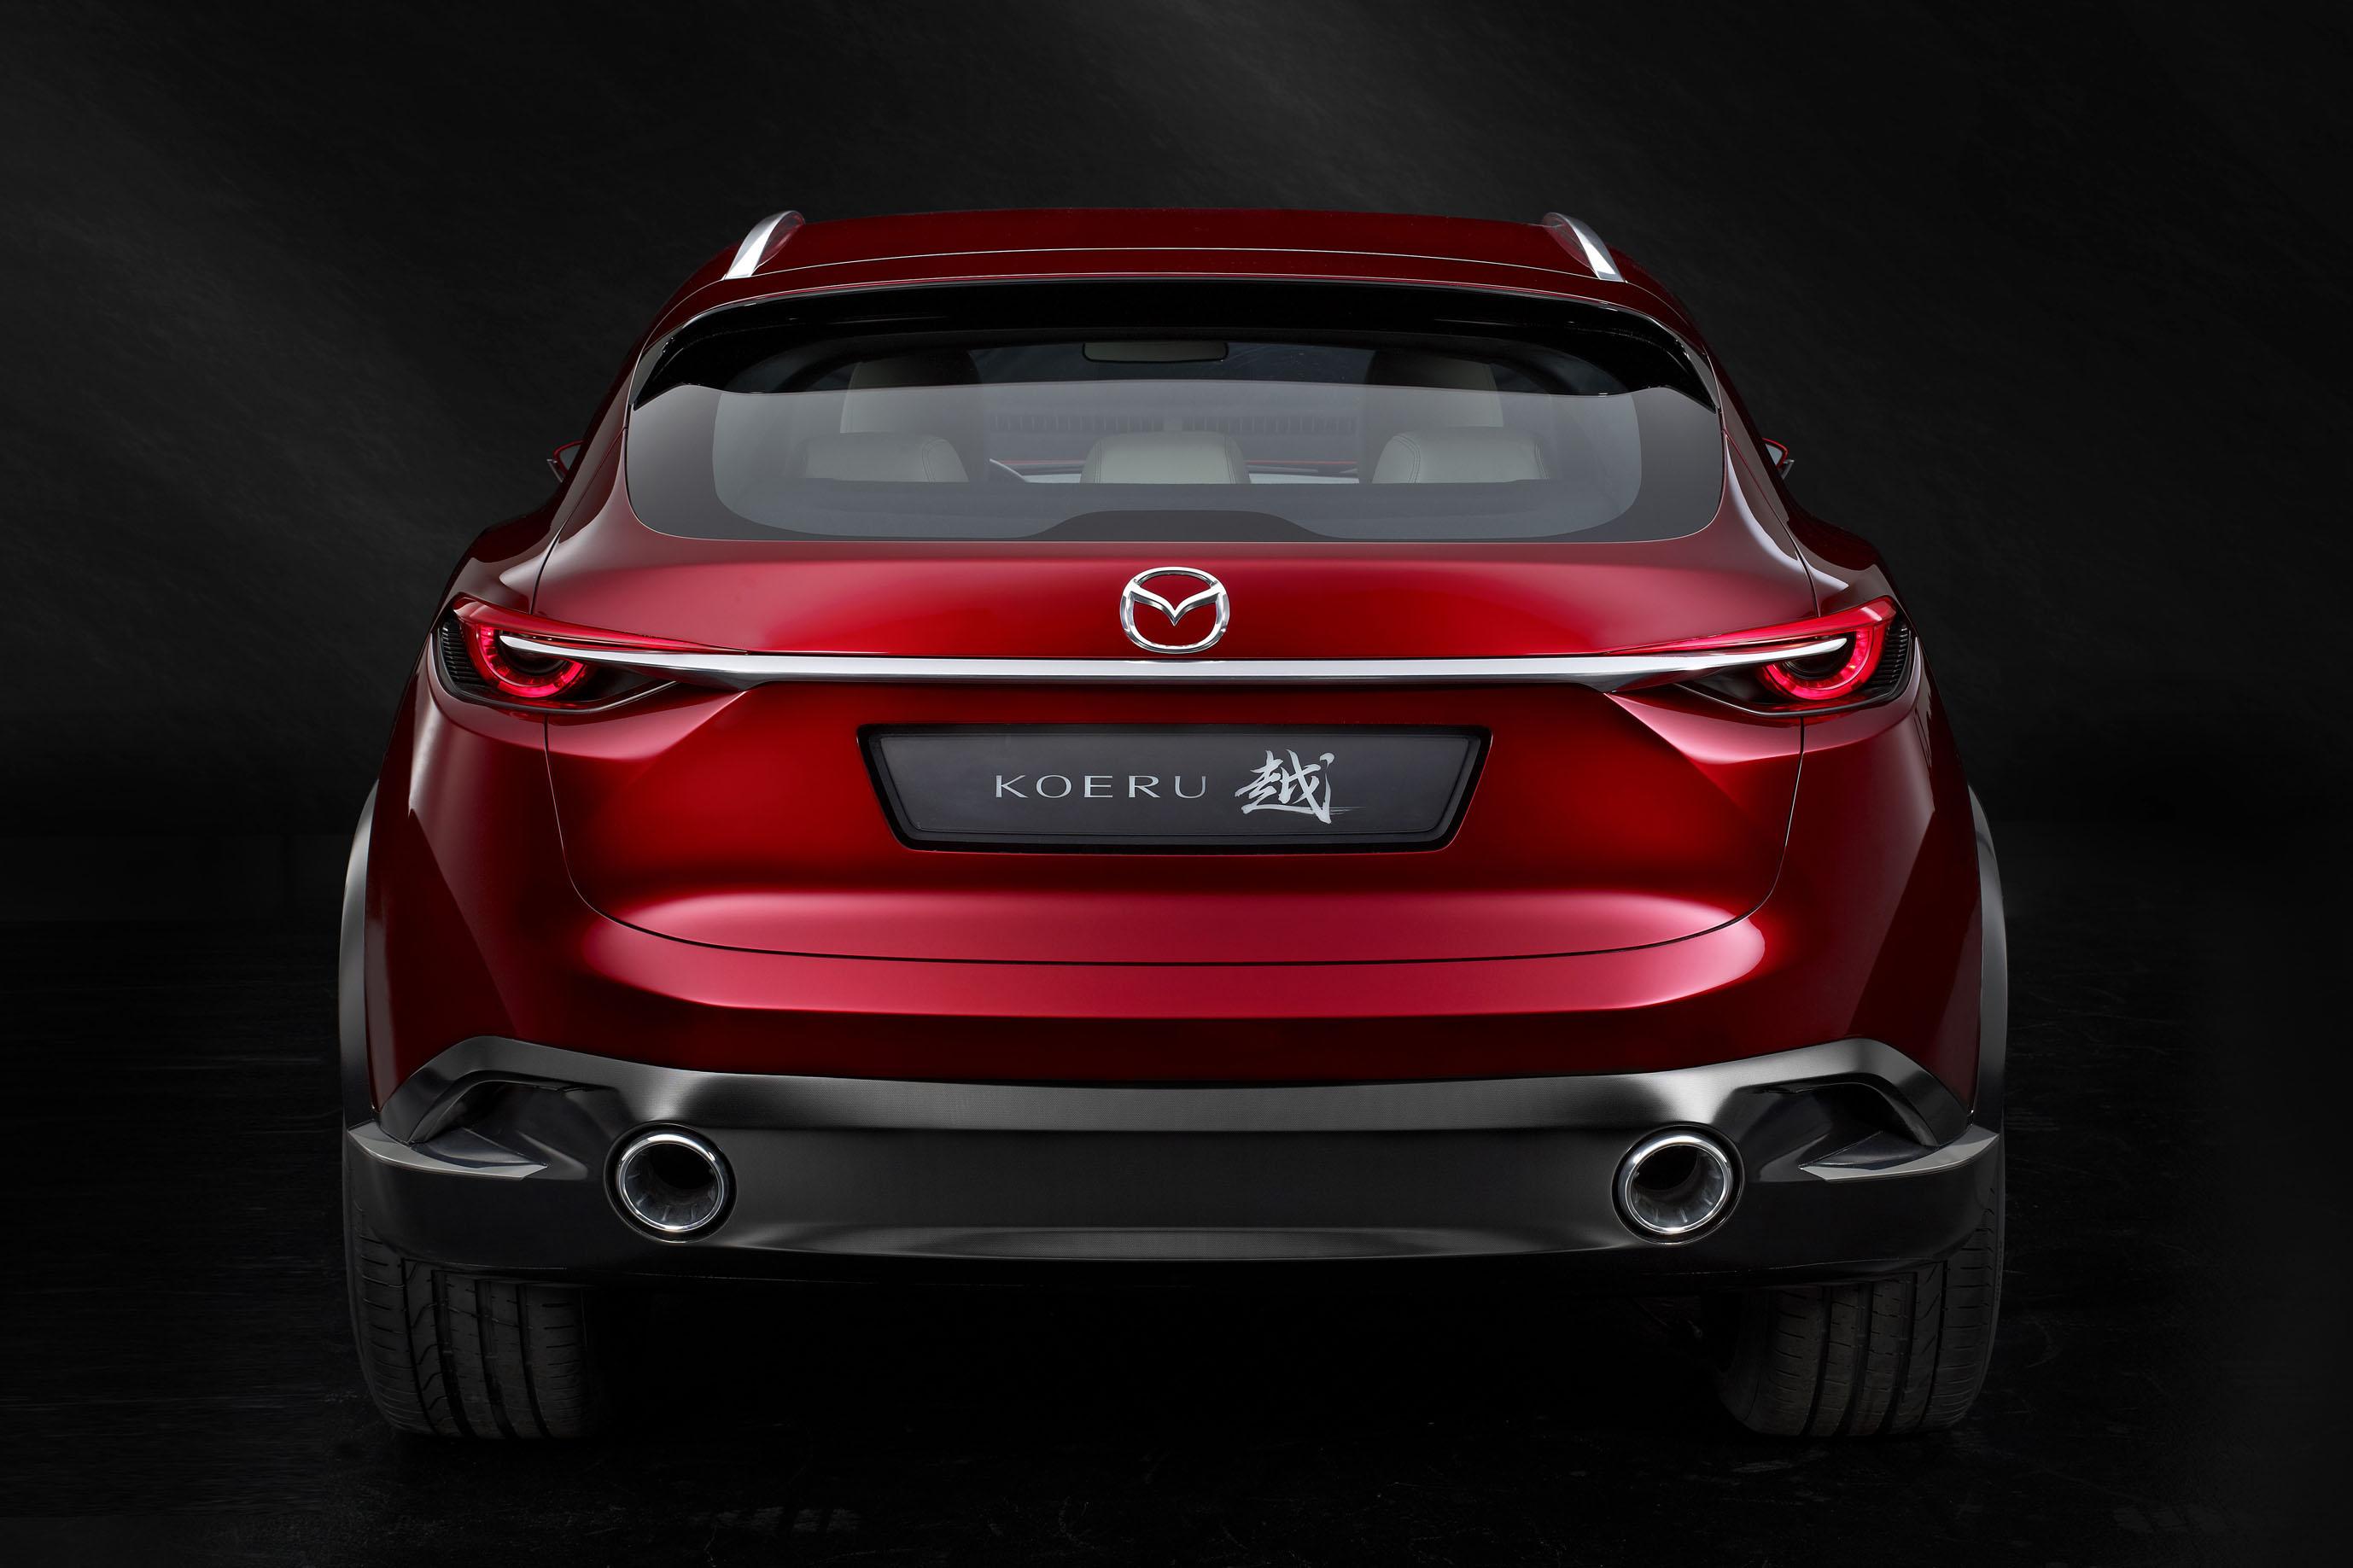 2022 Mazda Cx 50 Teased Ahead Of November 15 Reveal Carexpert